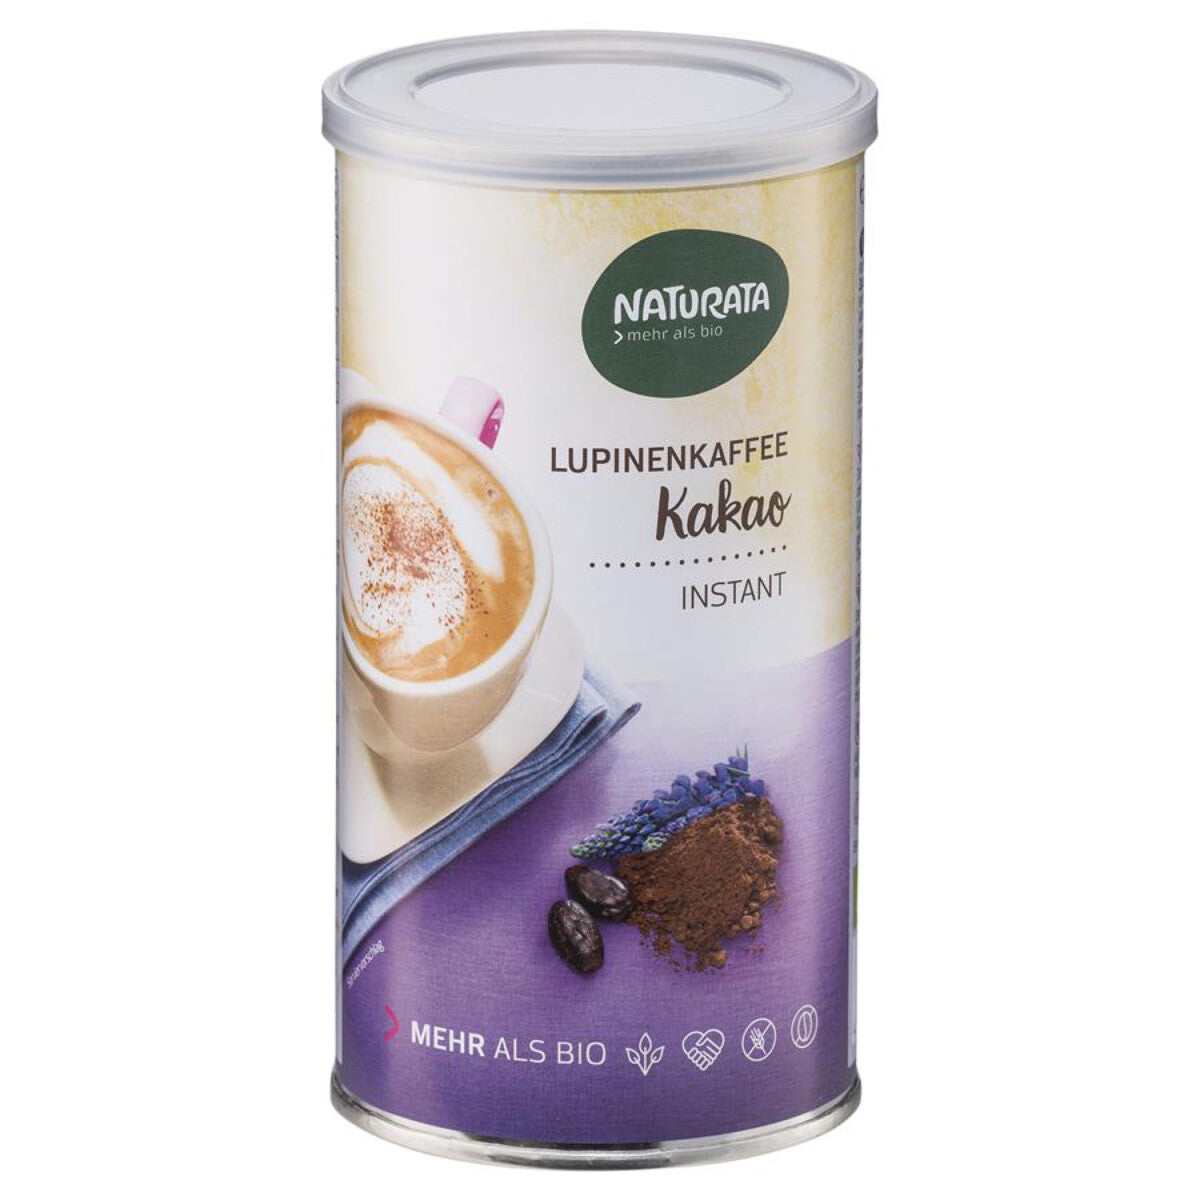 NATURATA Lupinenkaffee Kakao instant - 175 g